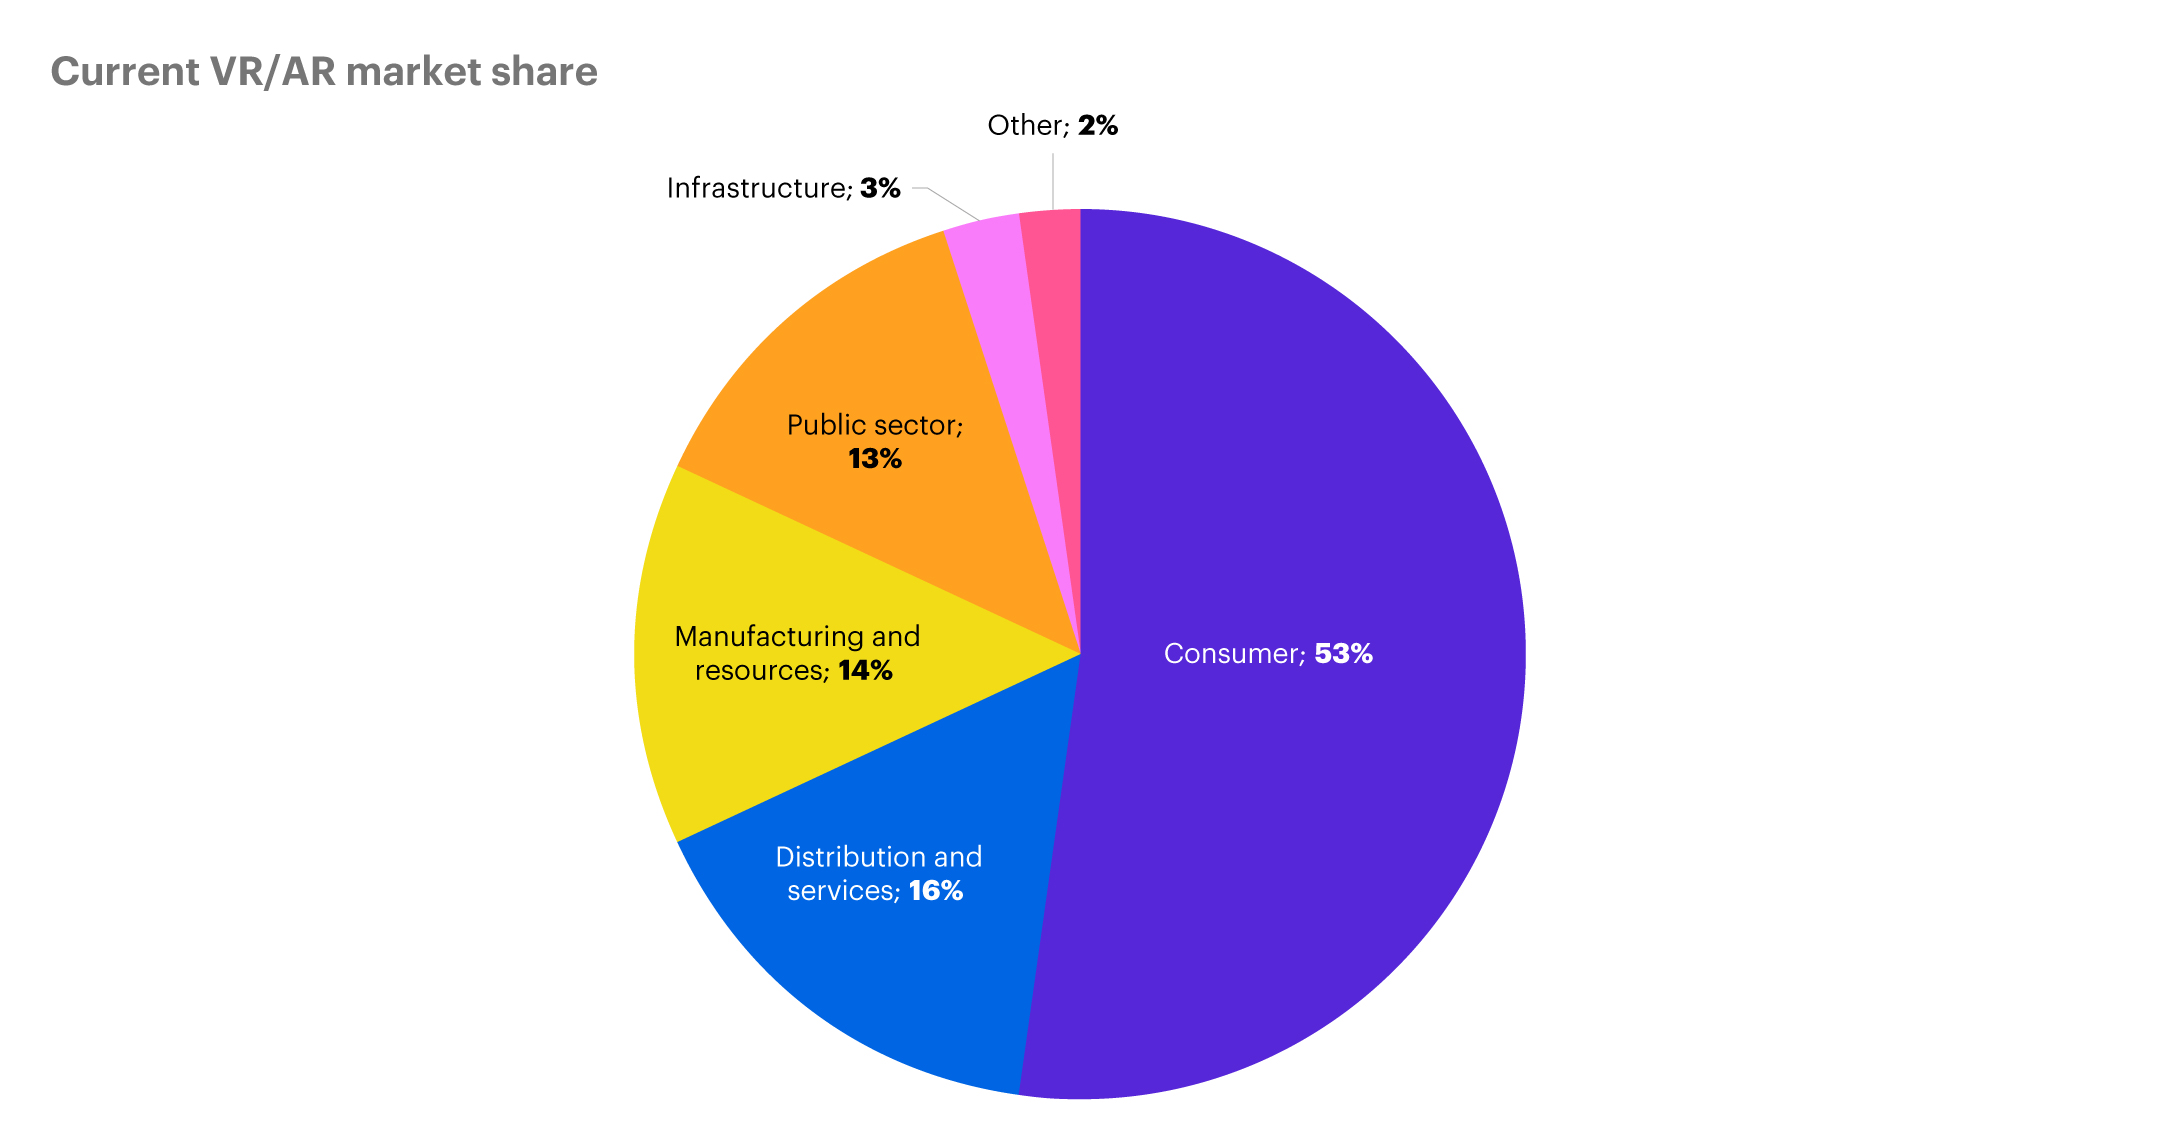 Current VR/AR market share pie chart. 